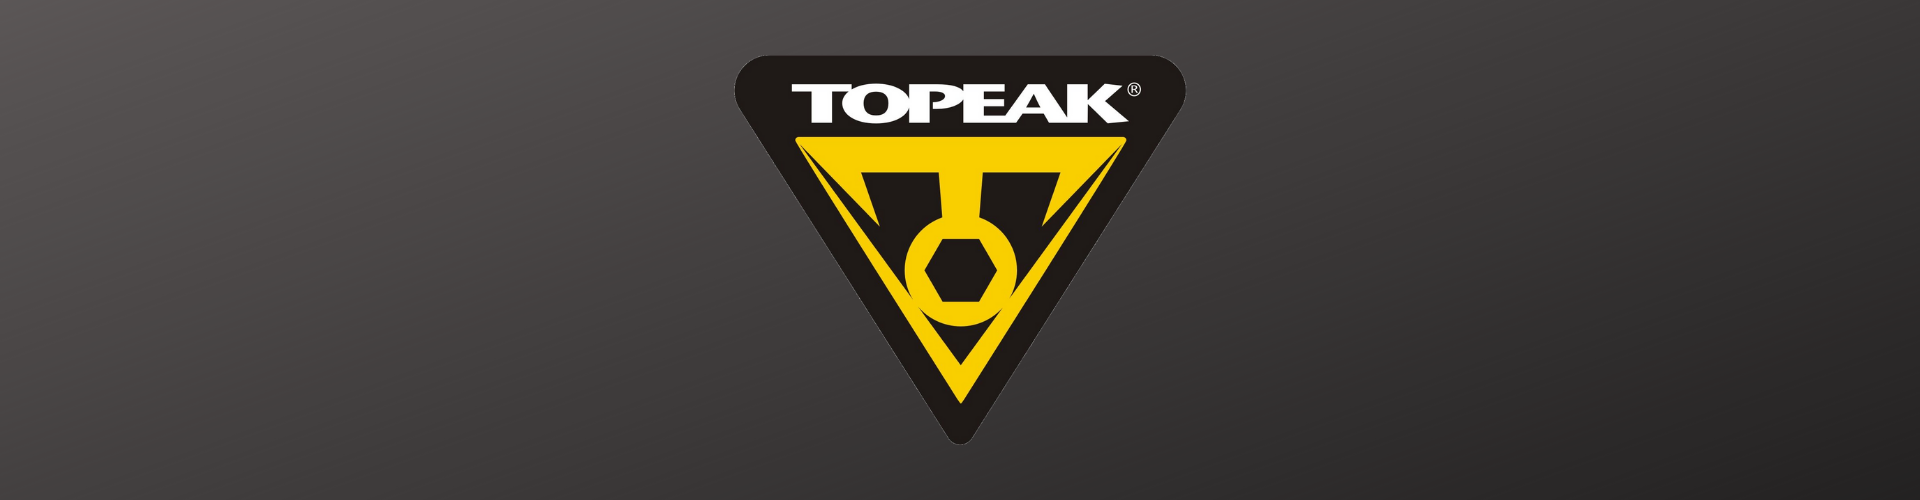 topeak Brand Category